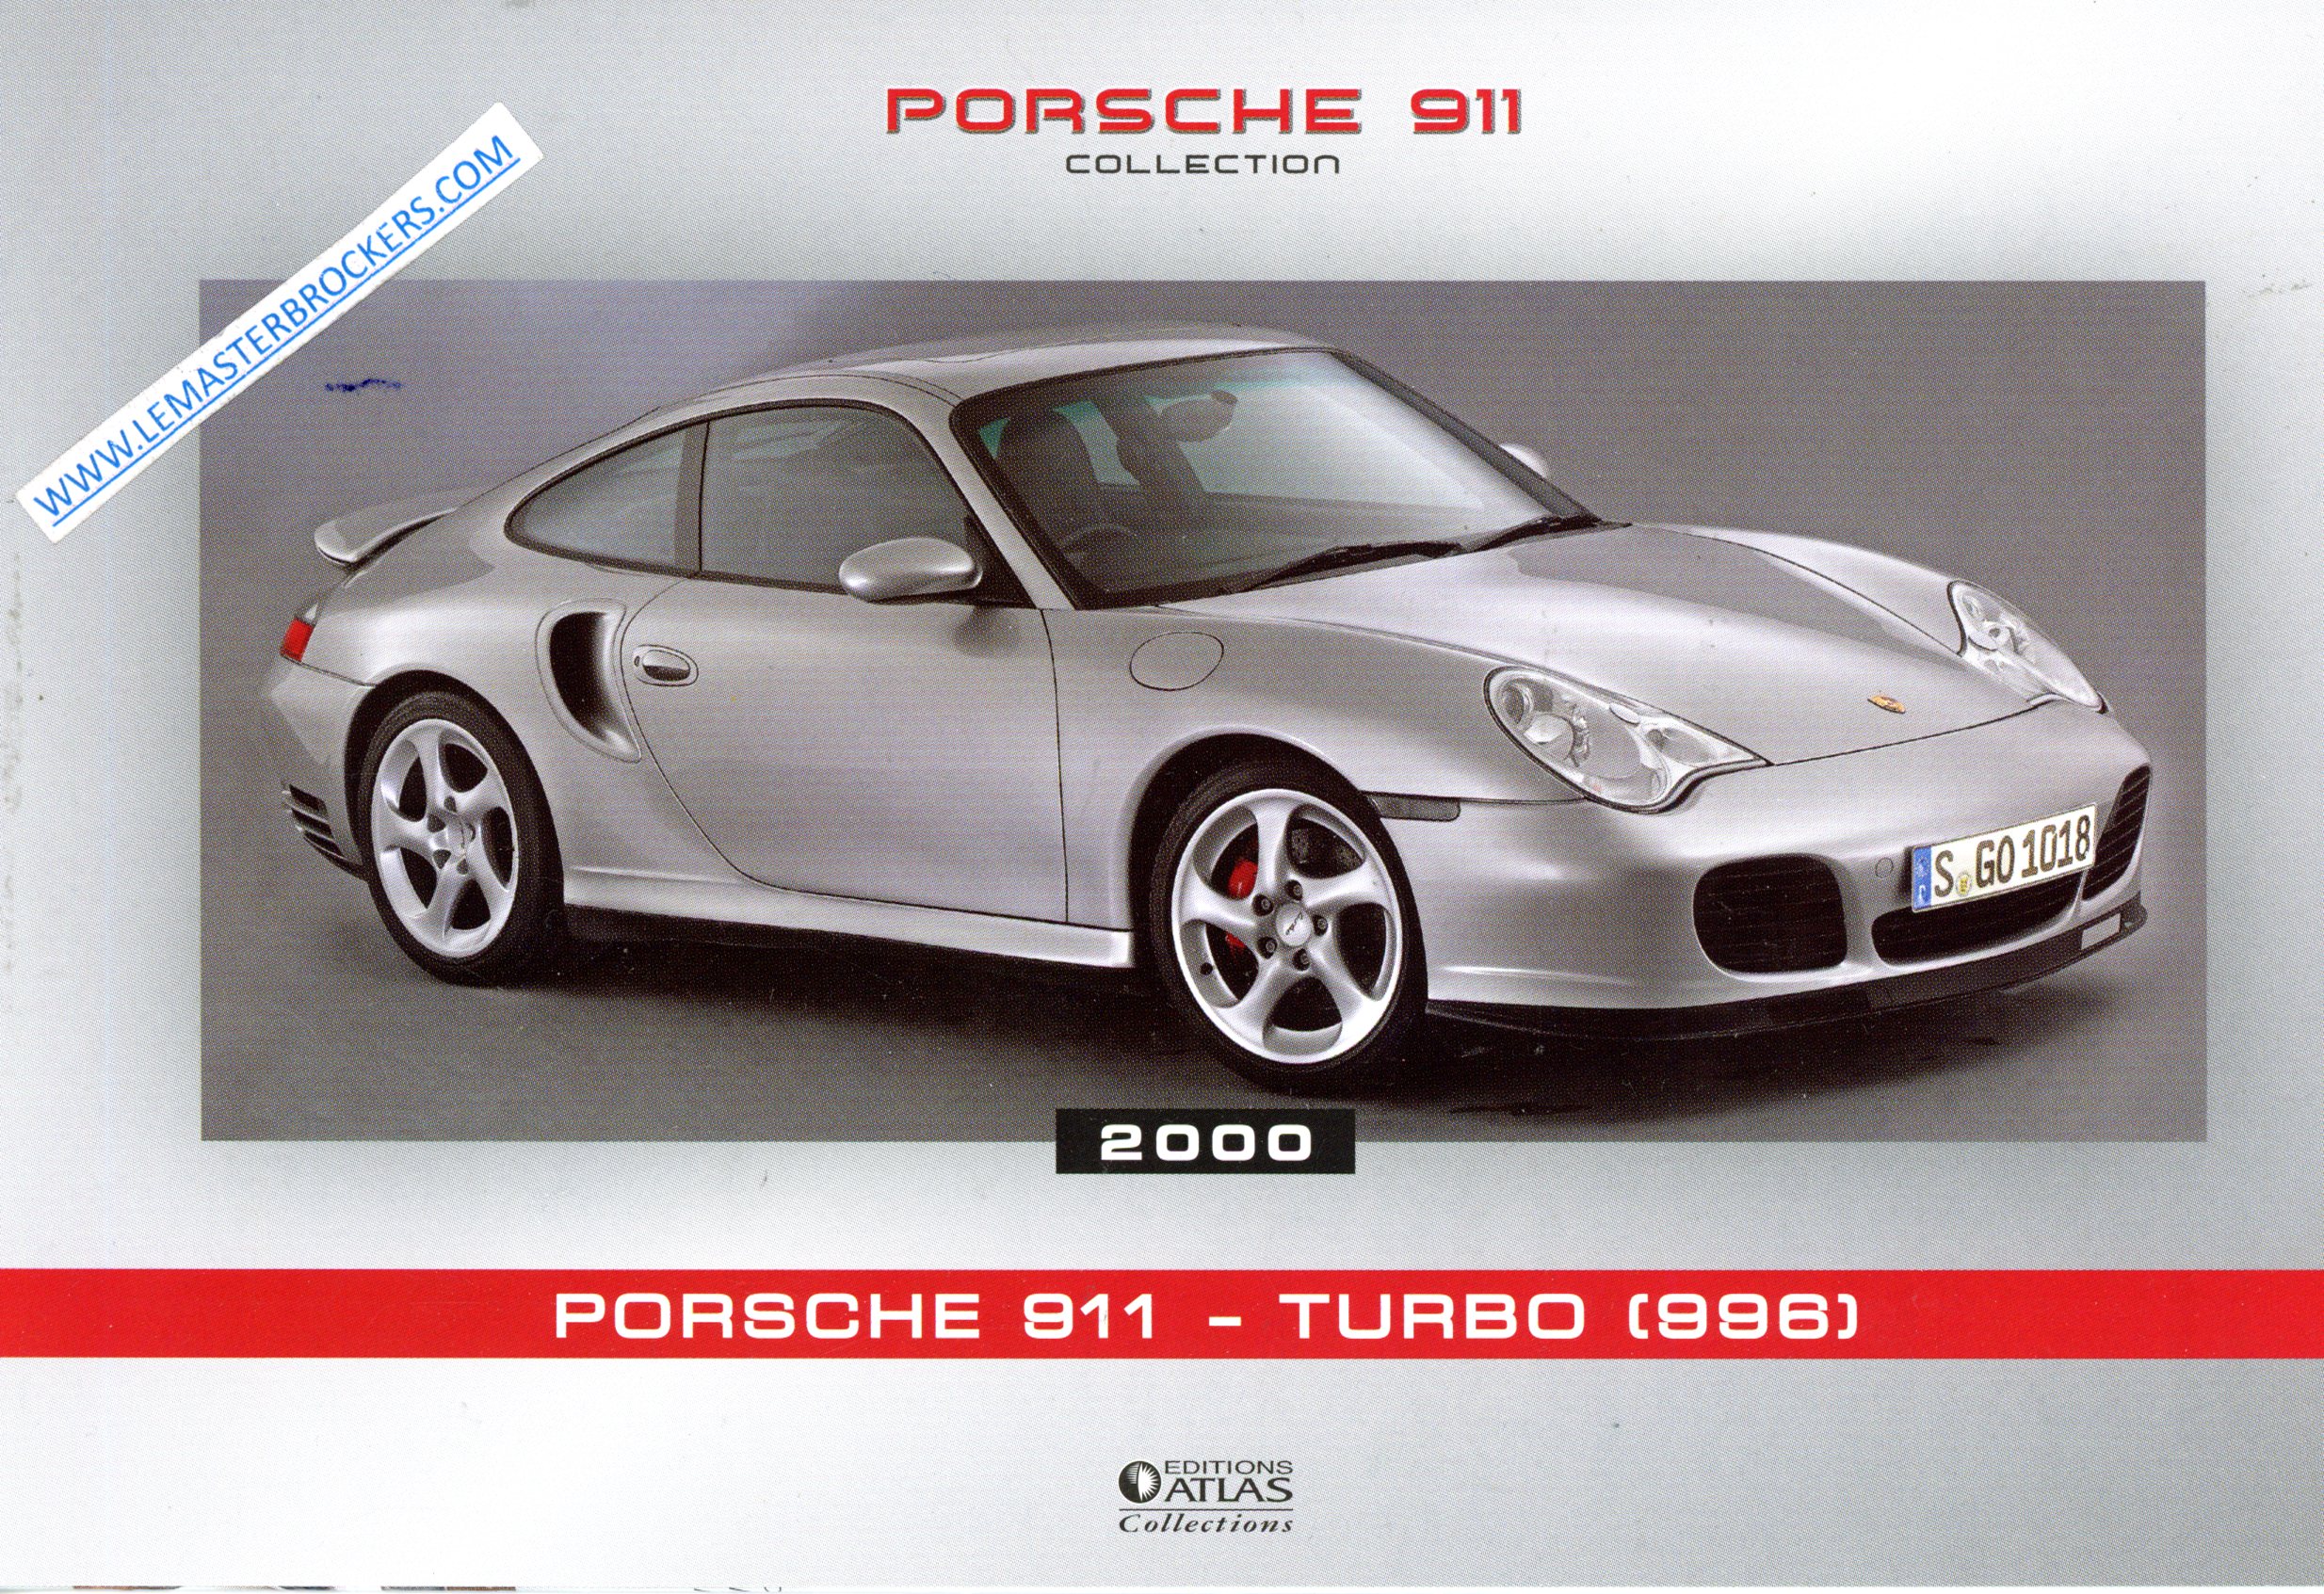 PORSCHE 911 TURBO 996 2000 FICHE AUTO PORSCHE